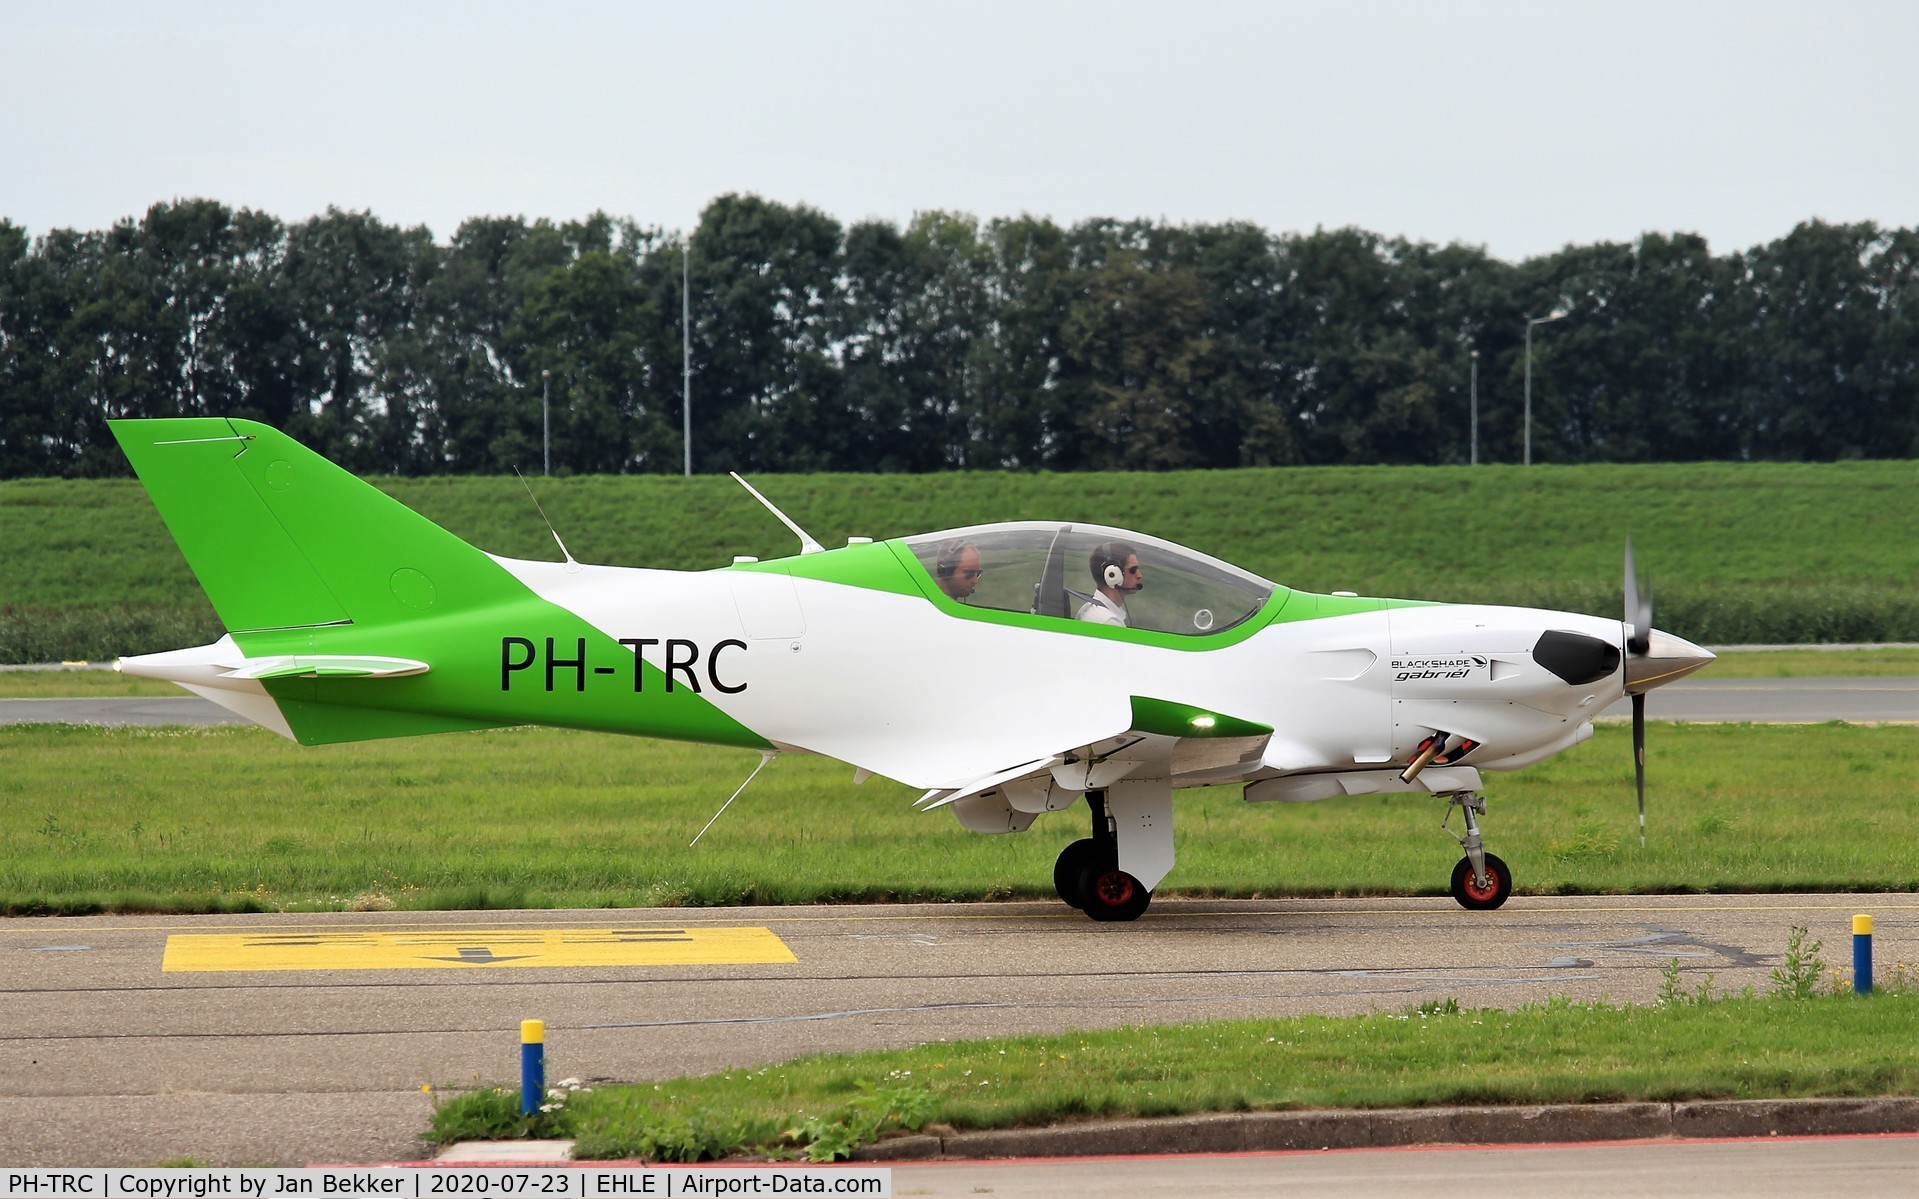 PH-TRC, Blackshape Gabriel BS.115 C/N 21003, Lelystad Airport. For training future Transavia pilots